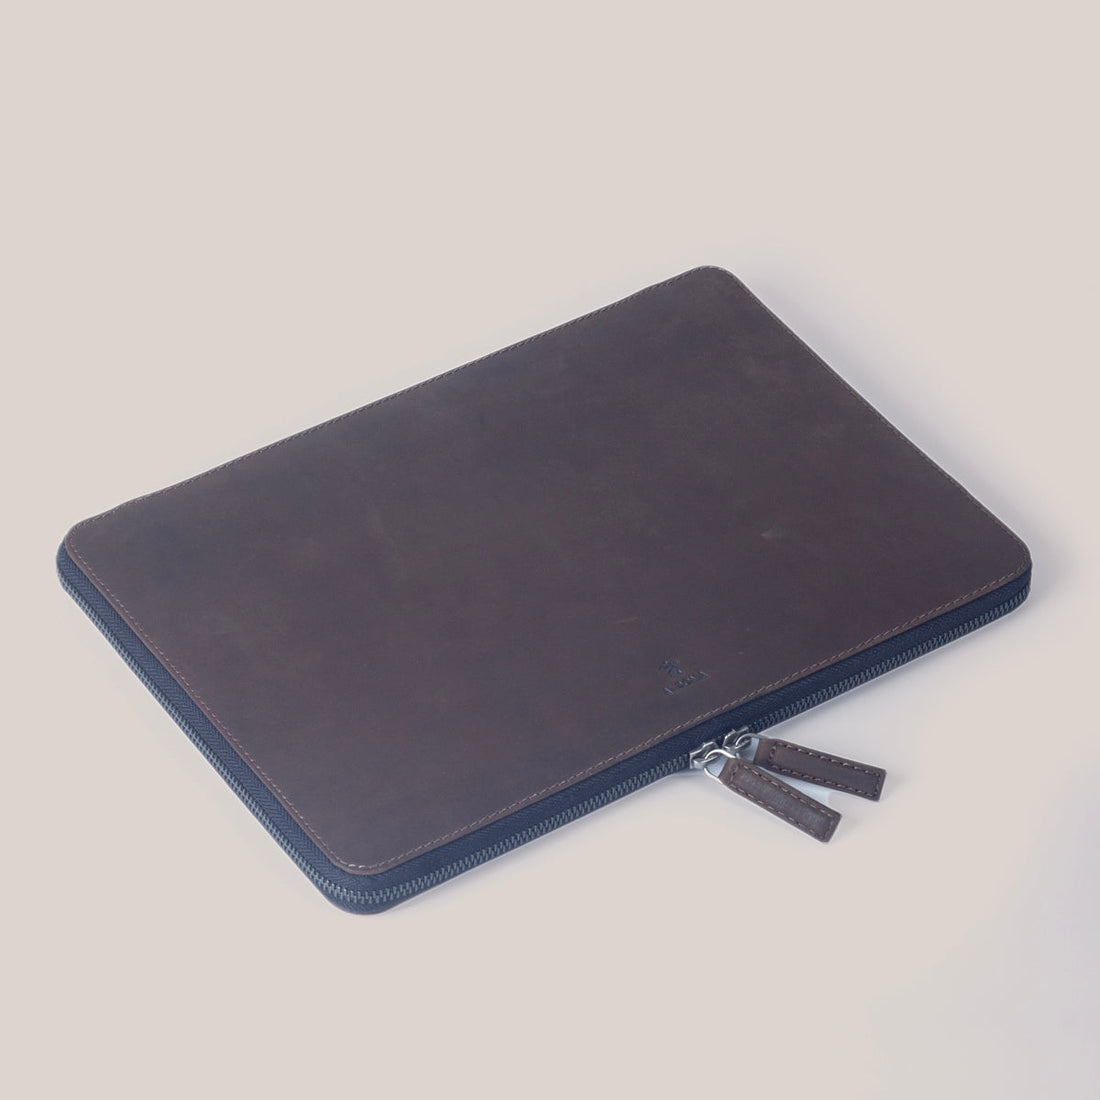 Microsoft Surface Laptop Studio Zippered Laptop Case - Felt and Tan Crunch